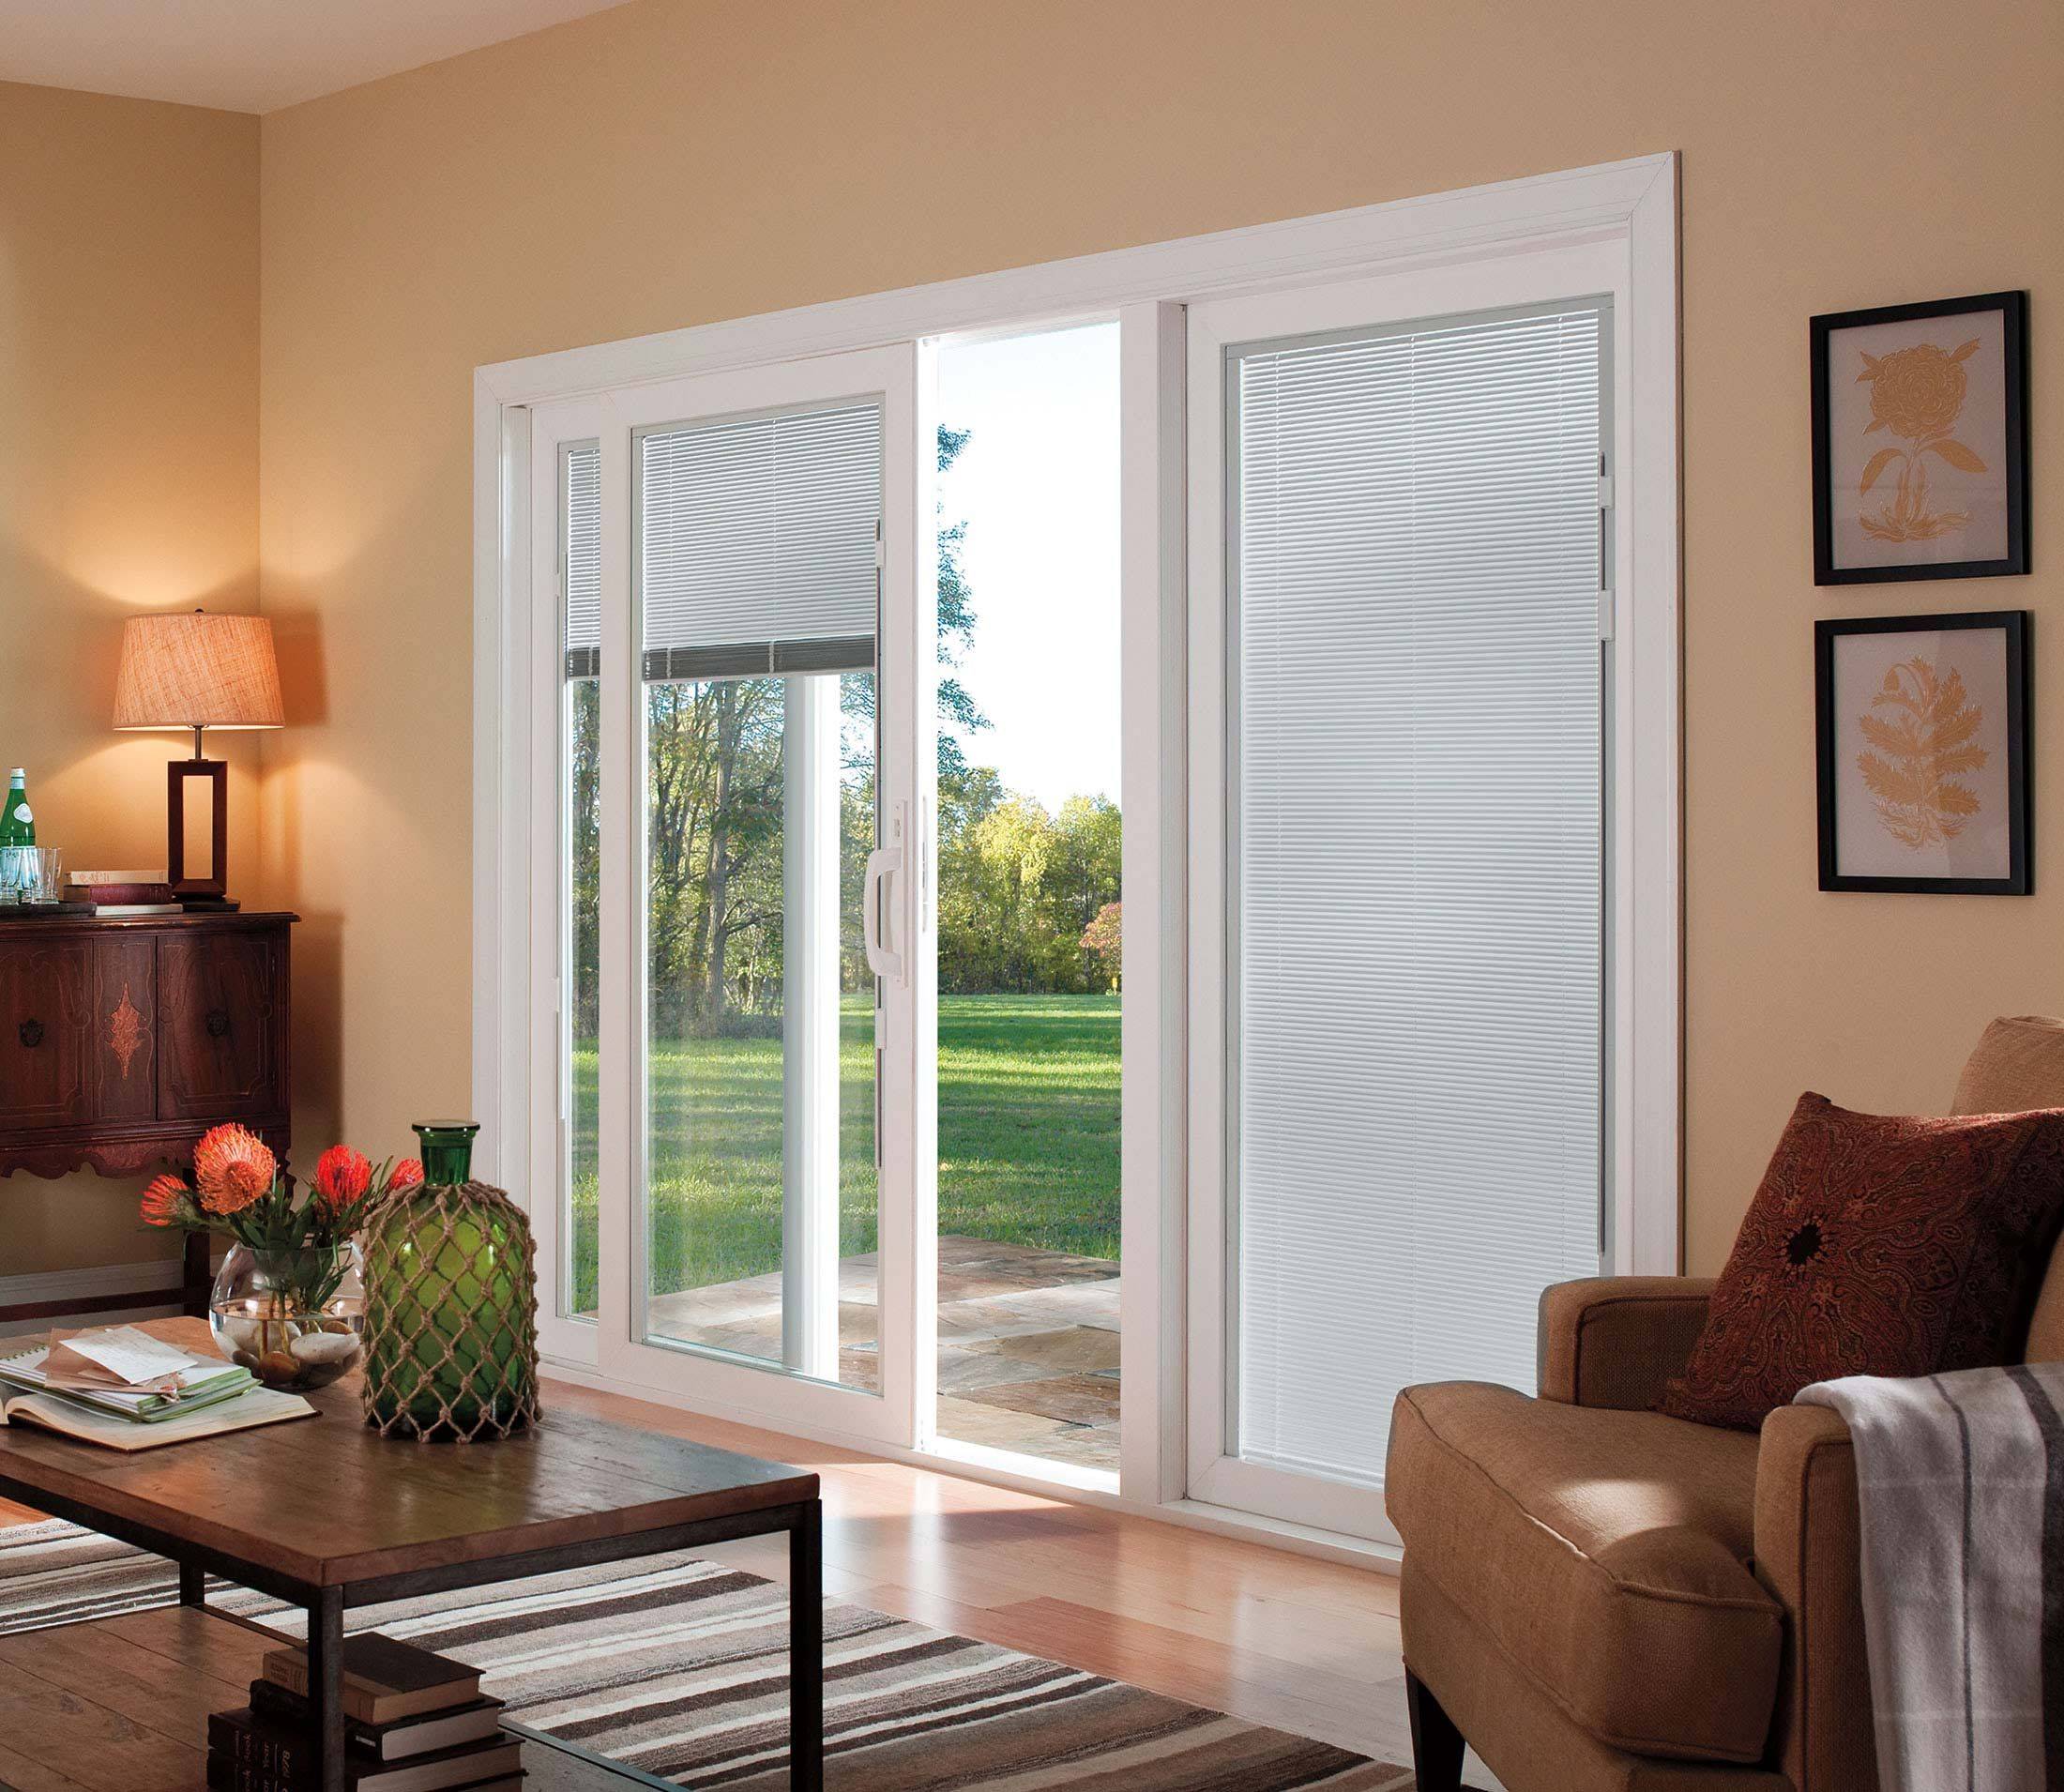 Window Treatment Ideas for Sliding Glass Doors Home Design